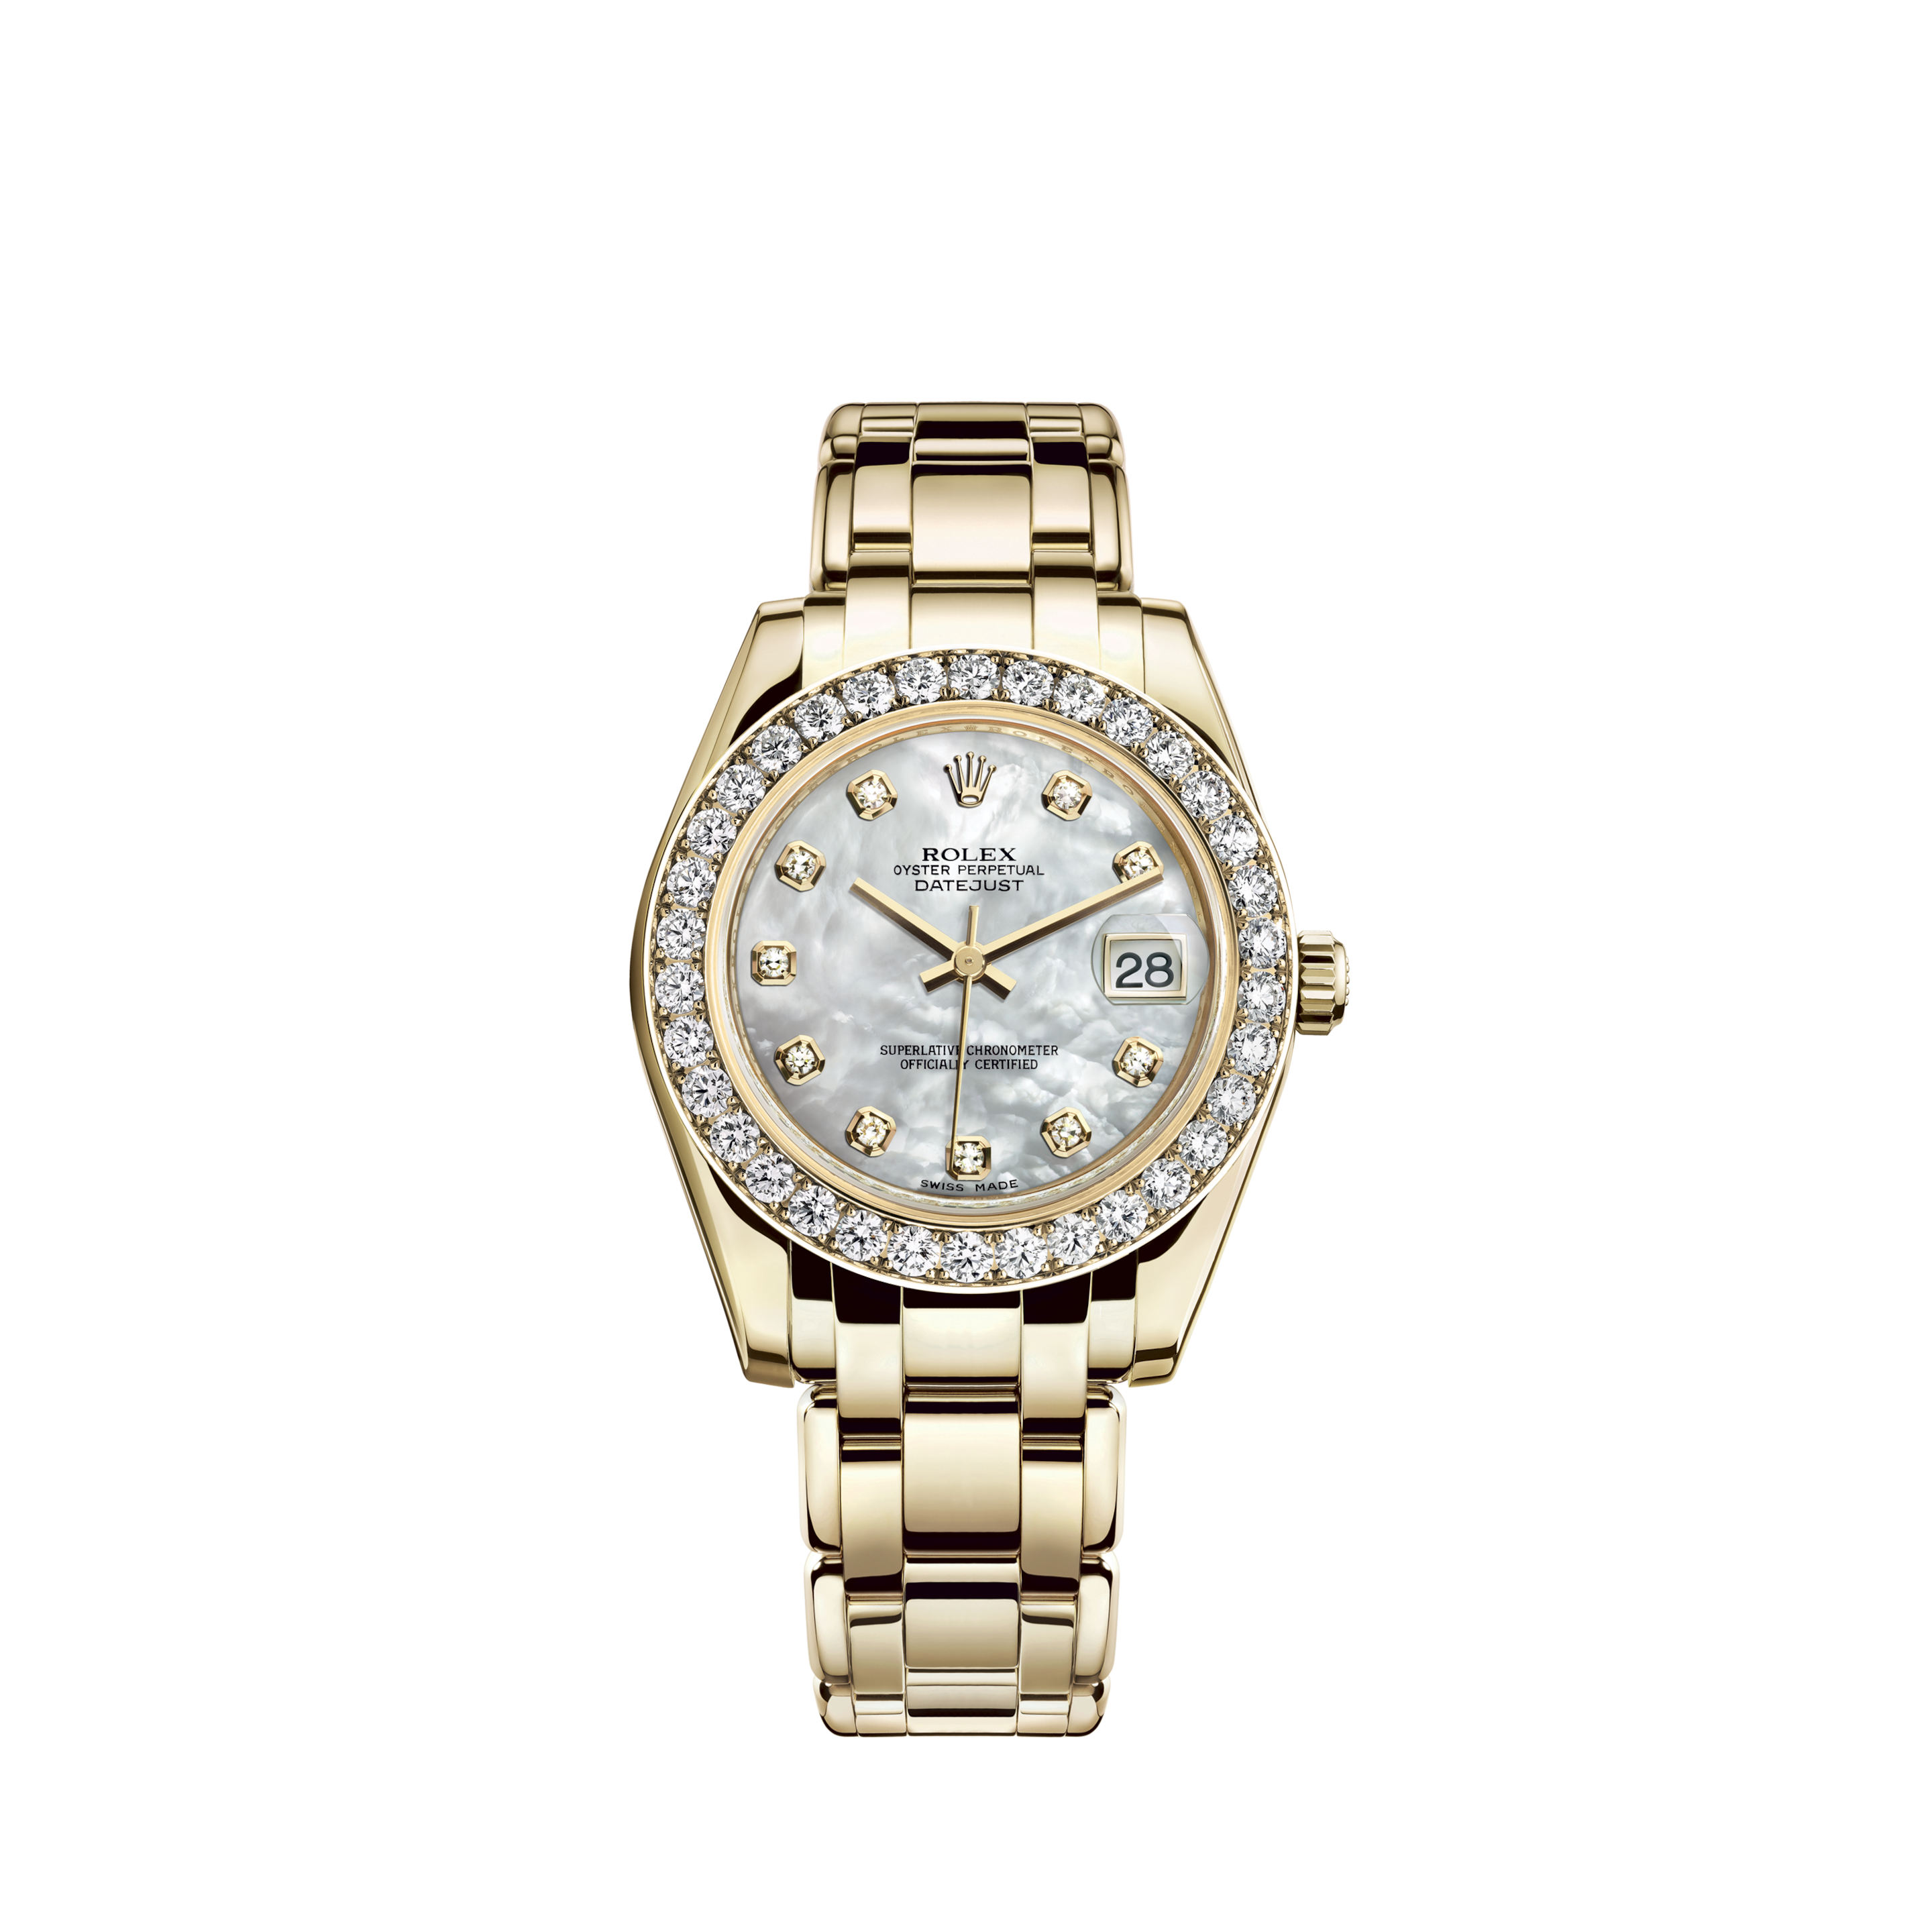 Rolex Submariner Date Serti Dial Men's Watch 16613